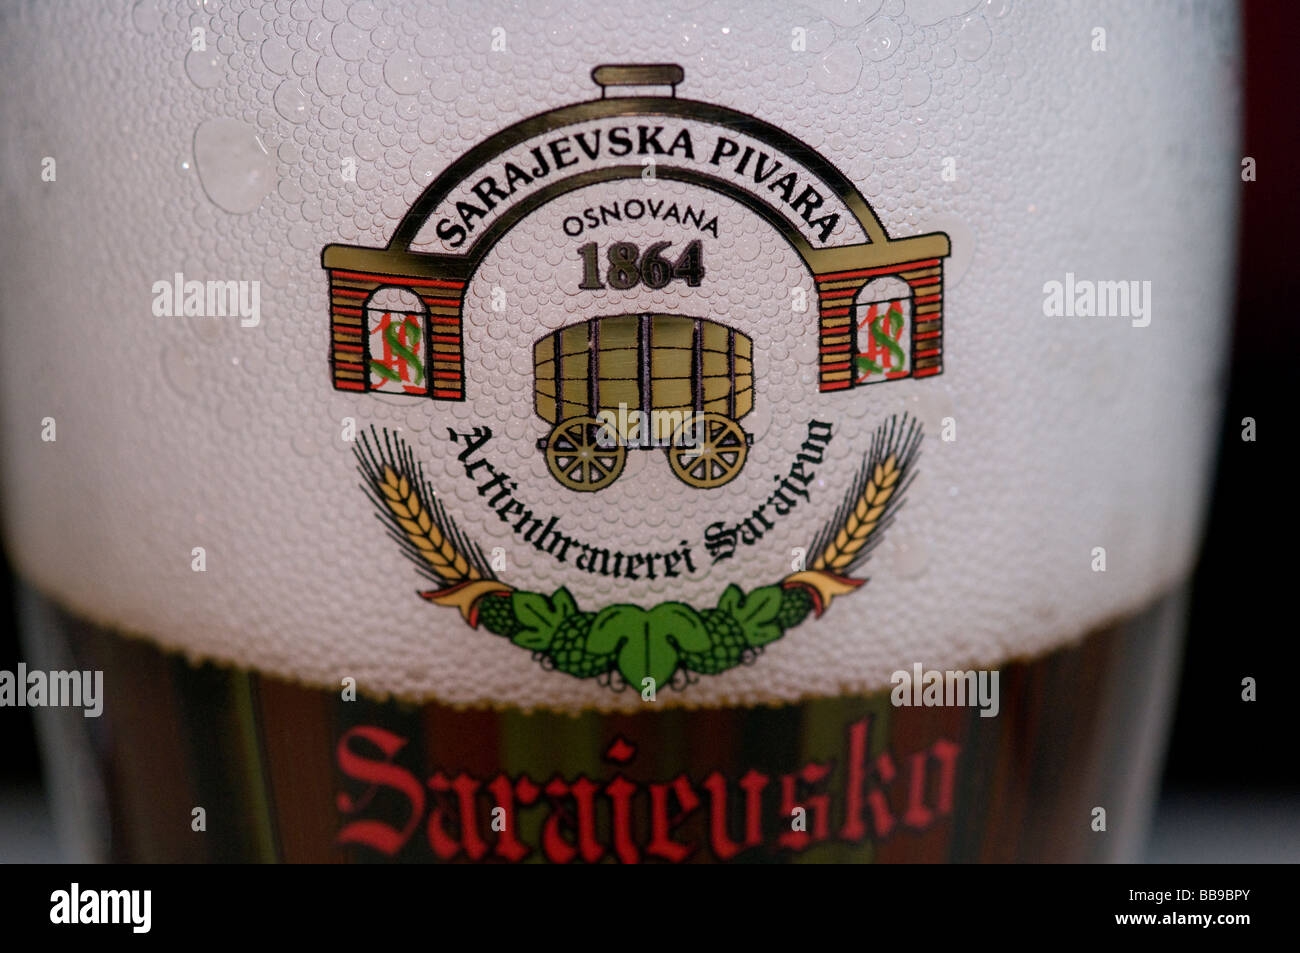 Glass of Sarajevska Pivara beer a Bosnian brewing company based in Sarajevo capital of Bosnia and Herzegovina Stock Photo